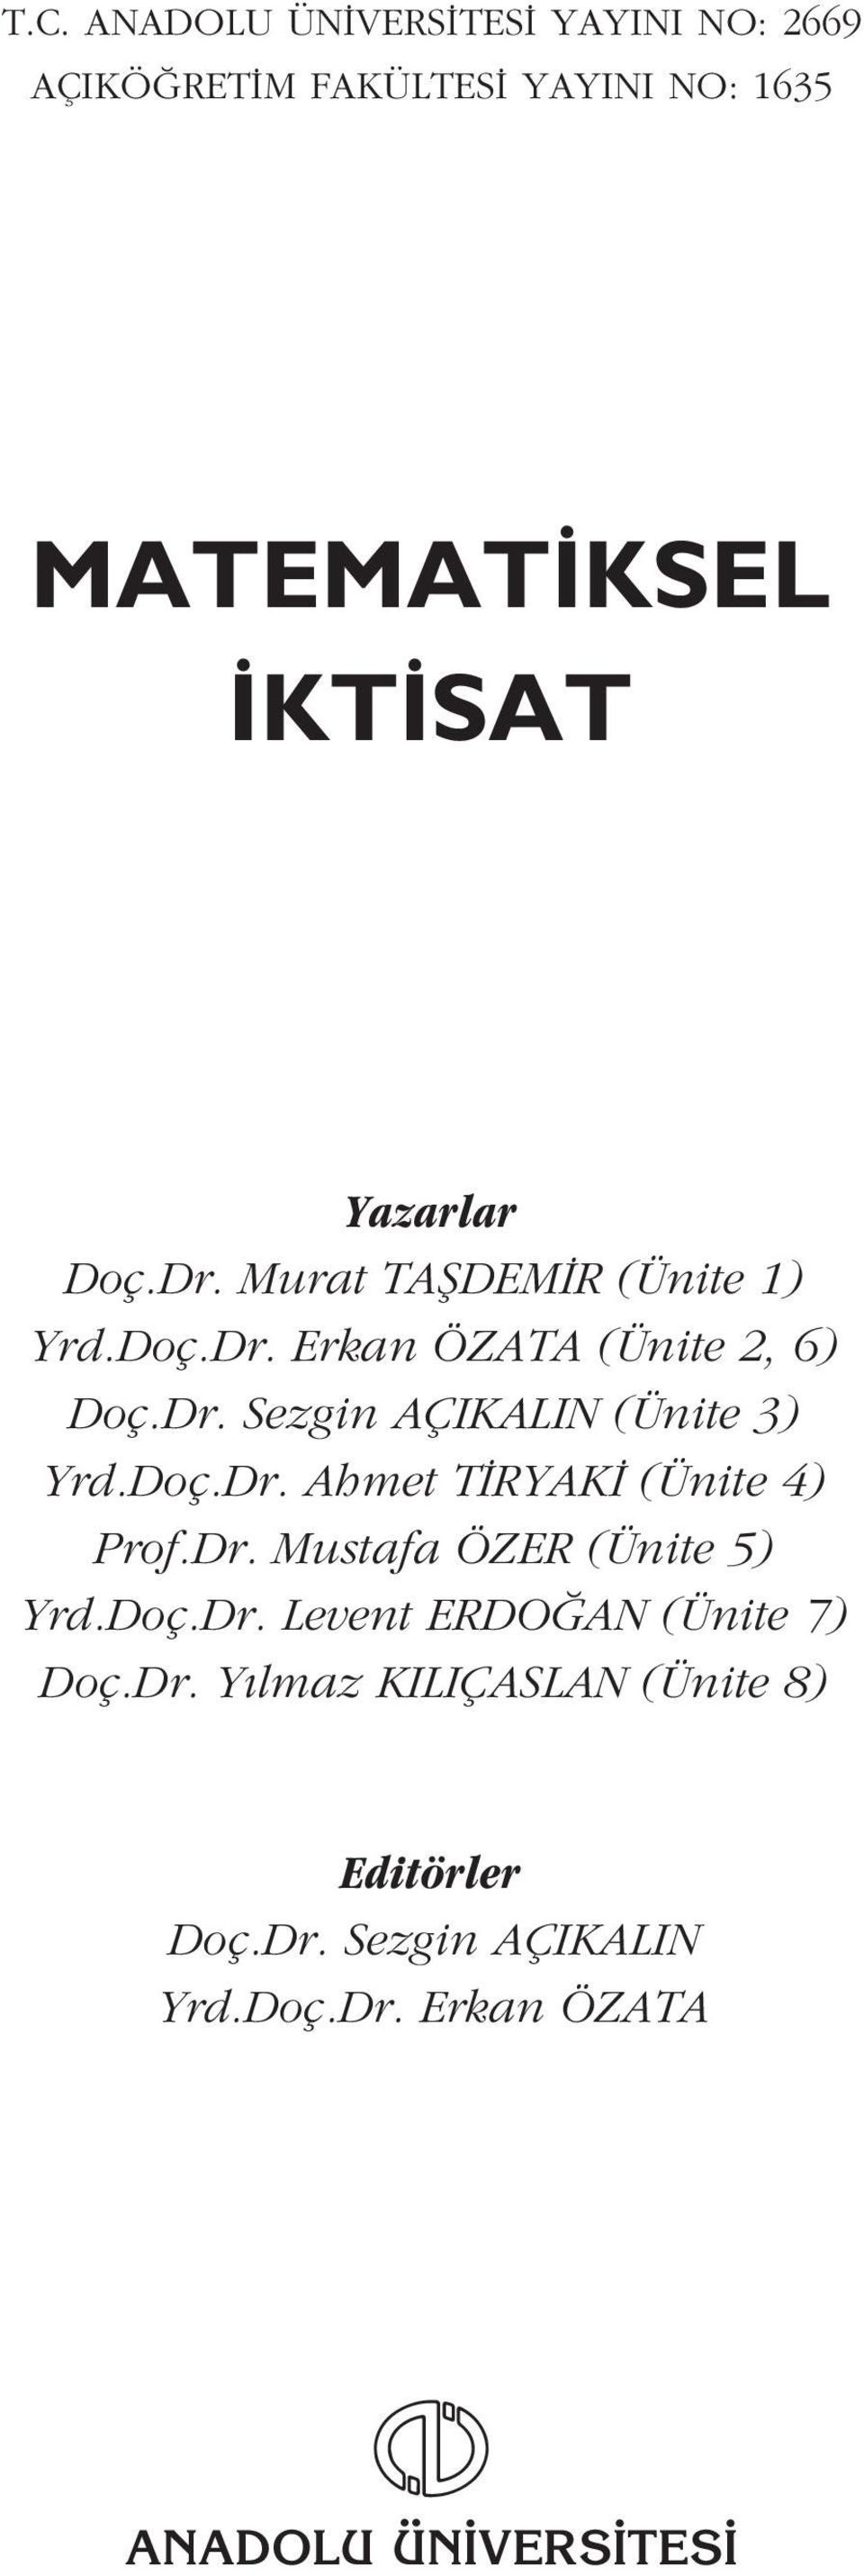 Doç.Dr. Ahmet T RYAK (Ünite 4) Prof.Dr. Mustafa ÖZER (Ünite 5) Yrd.Doç.Dr. Levent ERDO AN (Ünite 7) Doç.